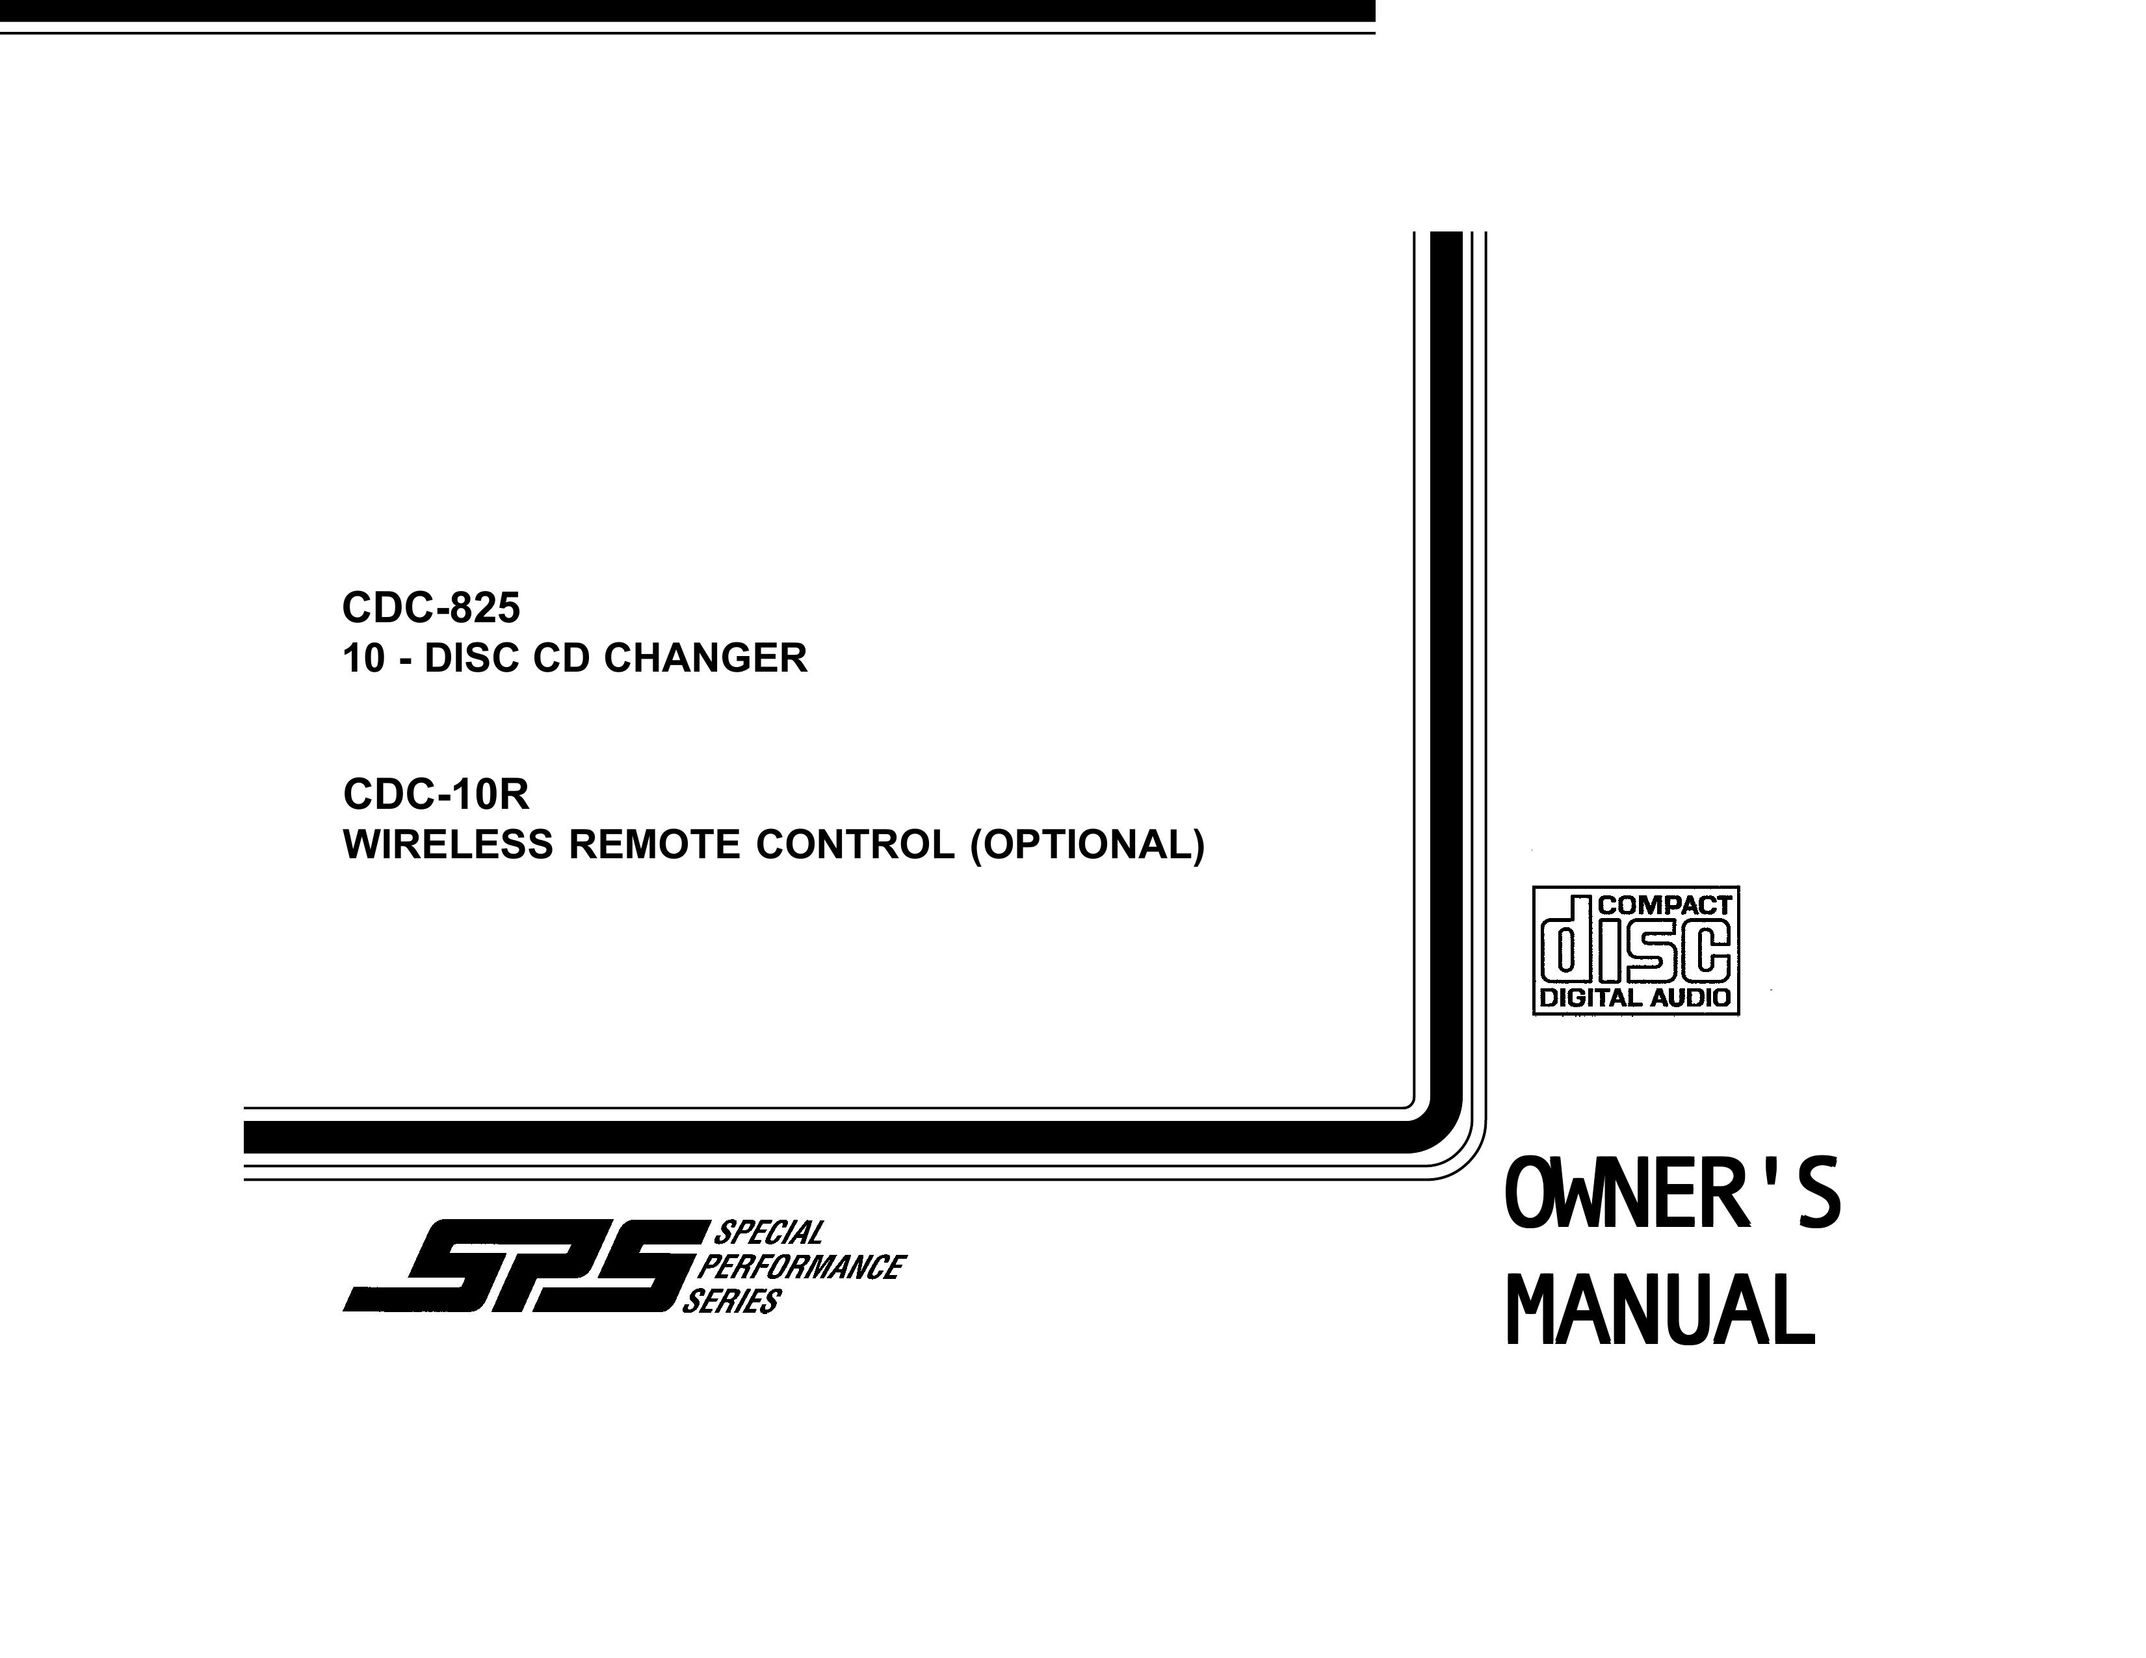 Audiovox CDC-10R CD Player User Manual